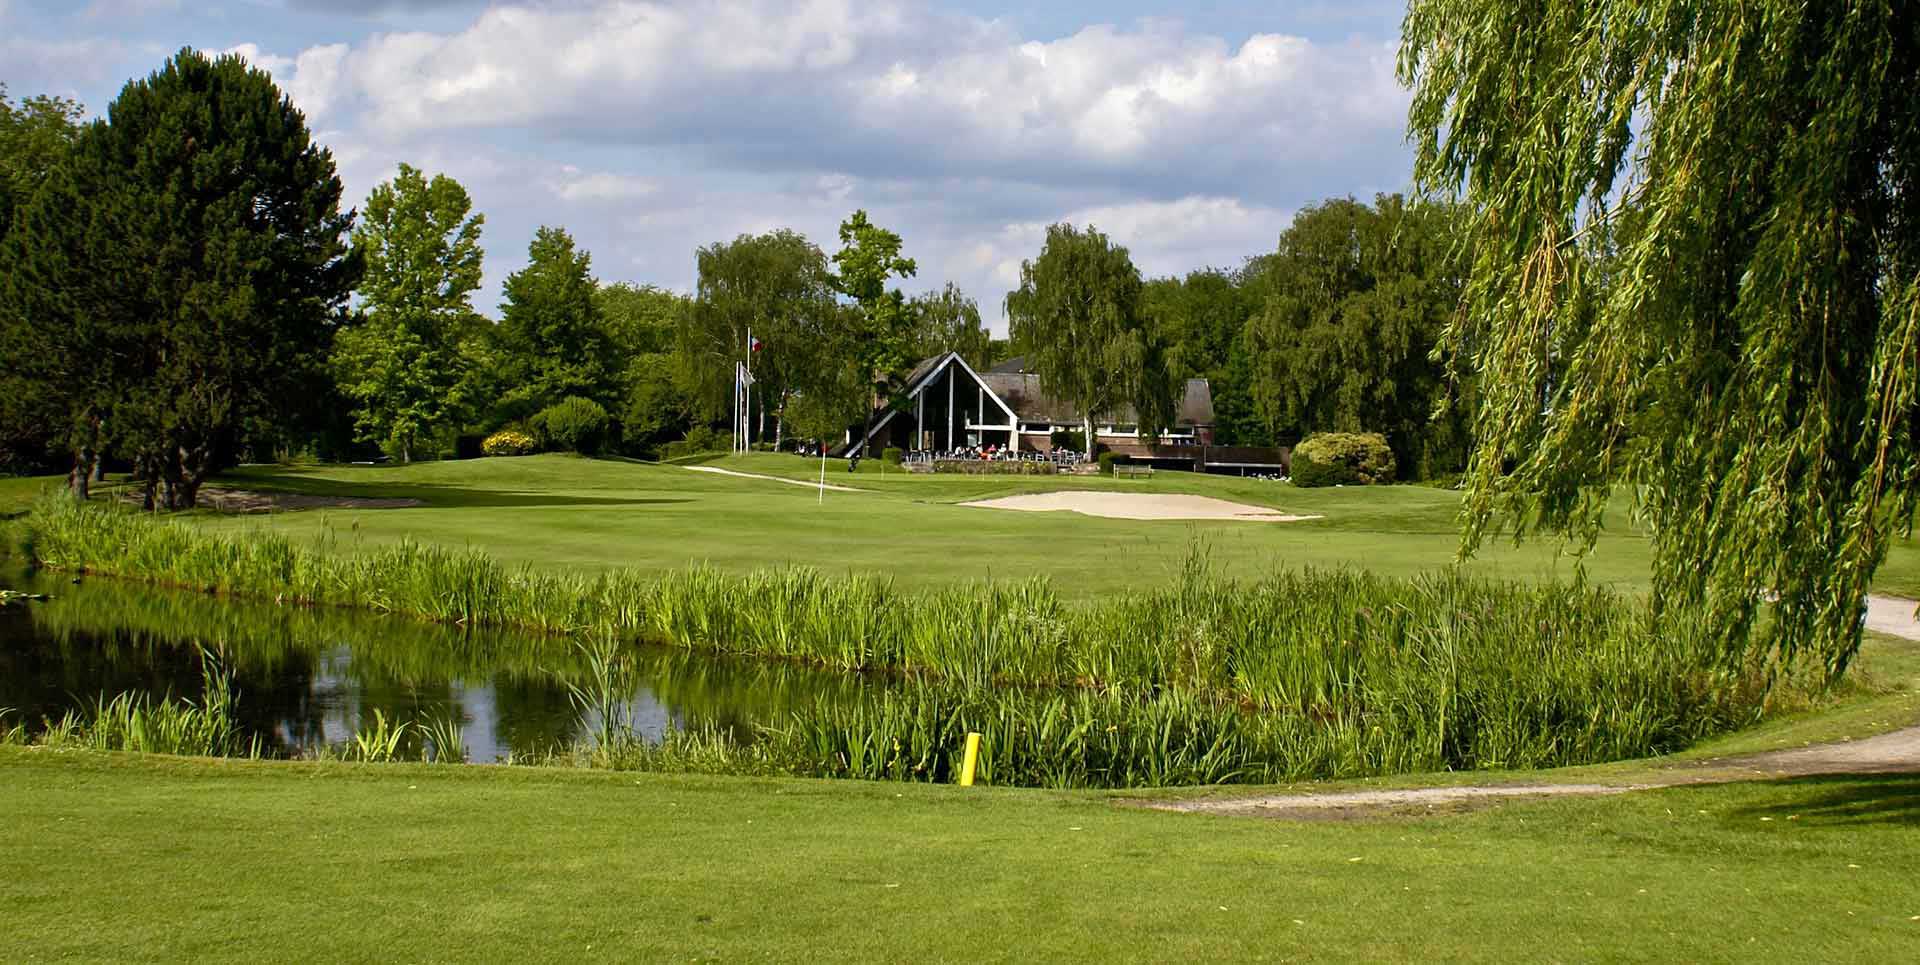 The 18th hole at Golf de Brigode, Lille, France